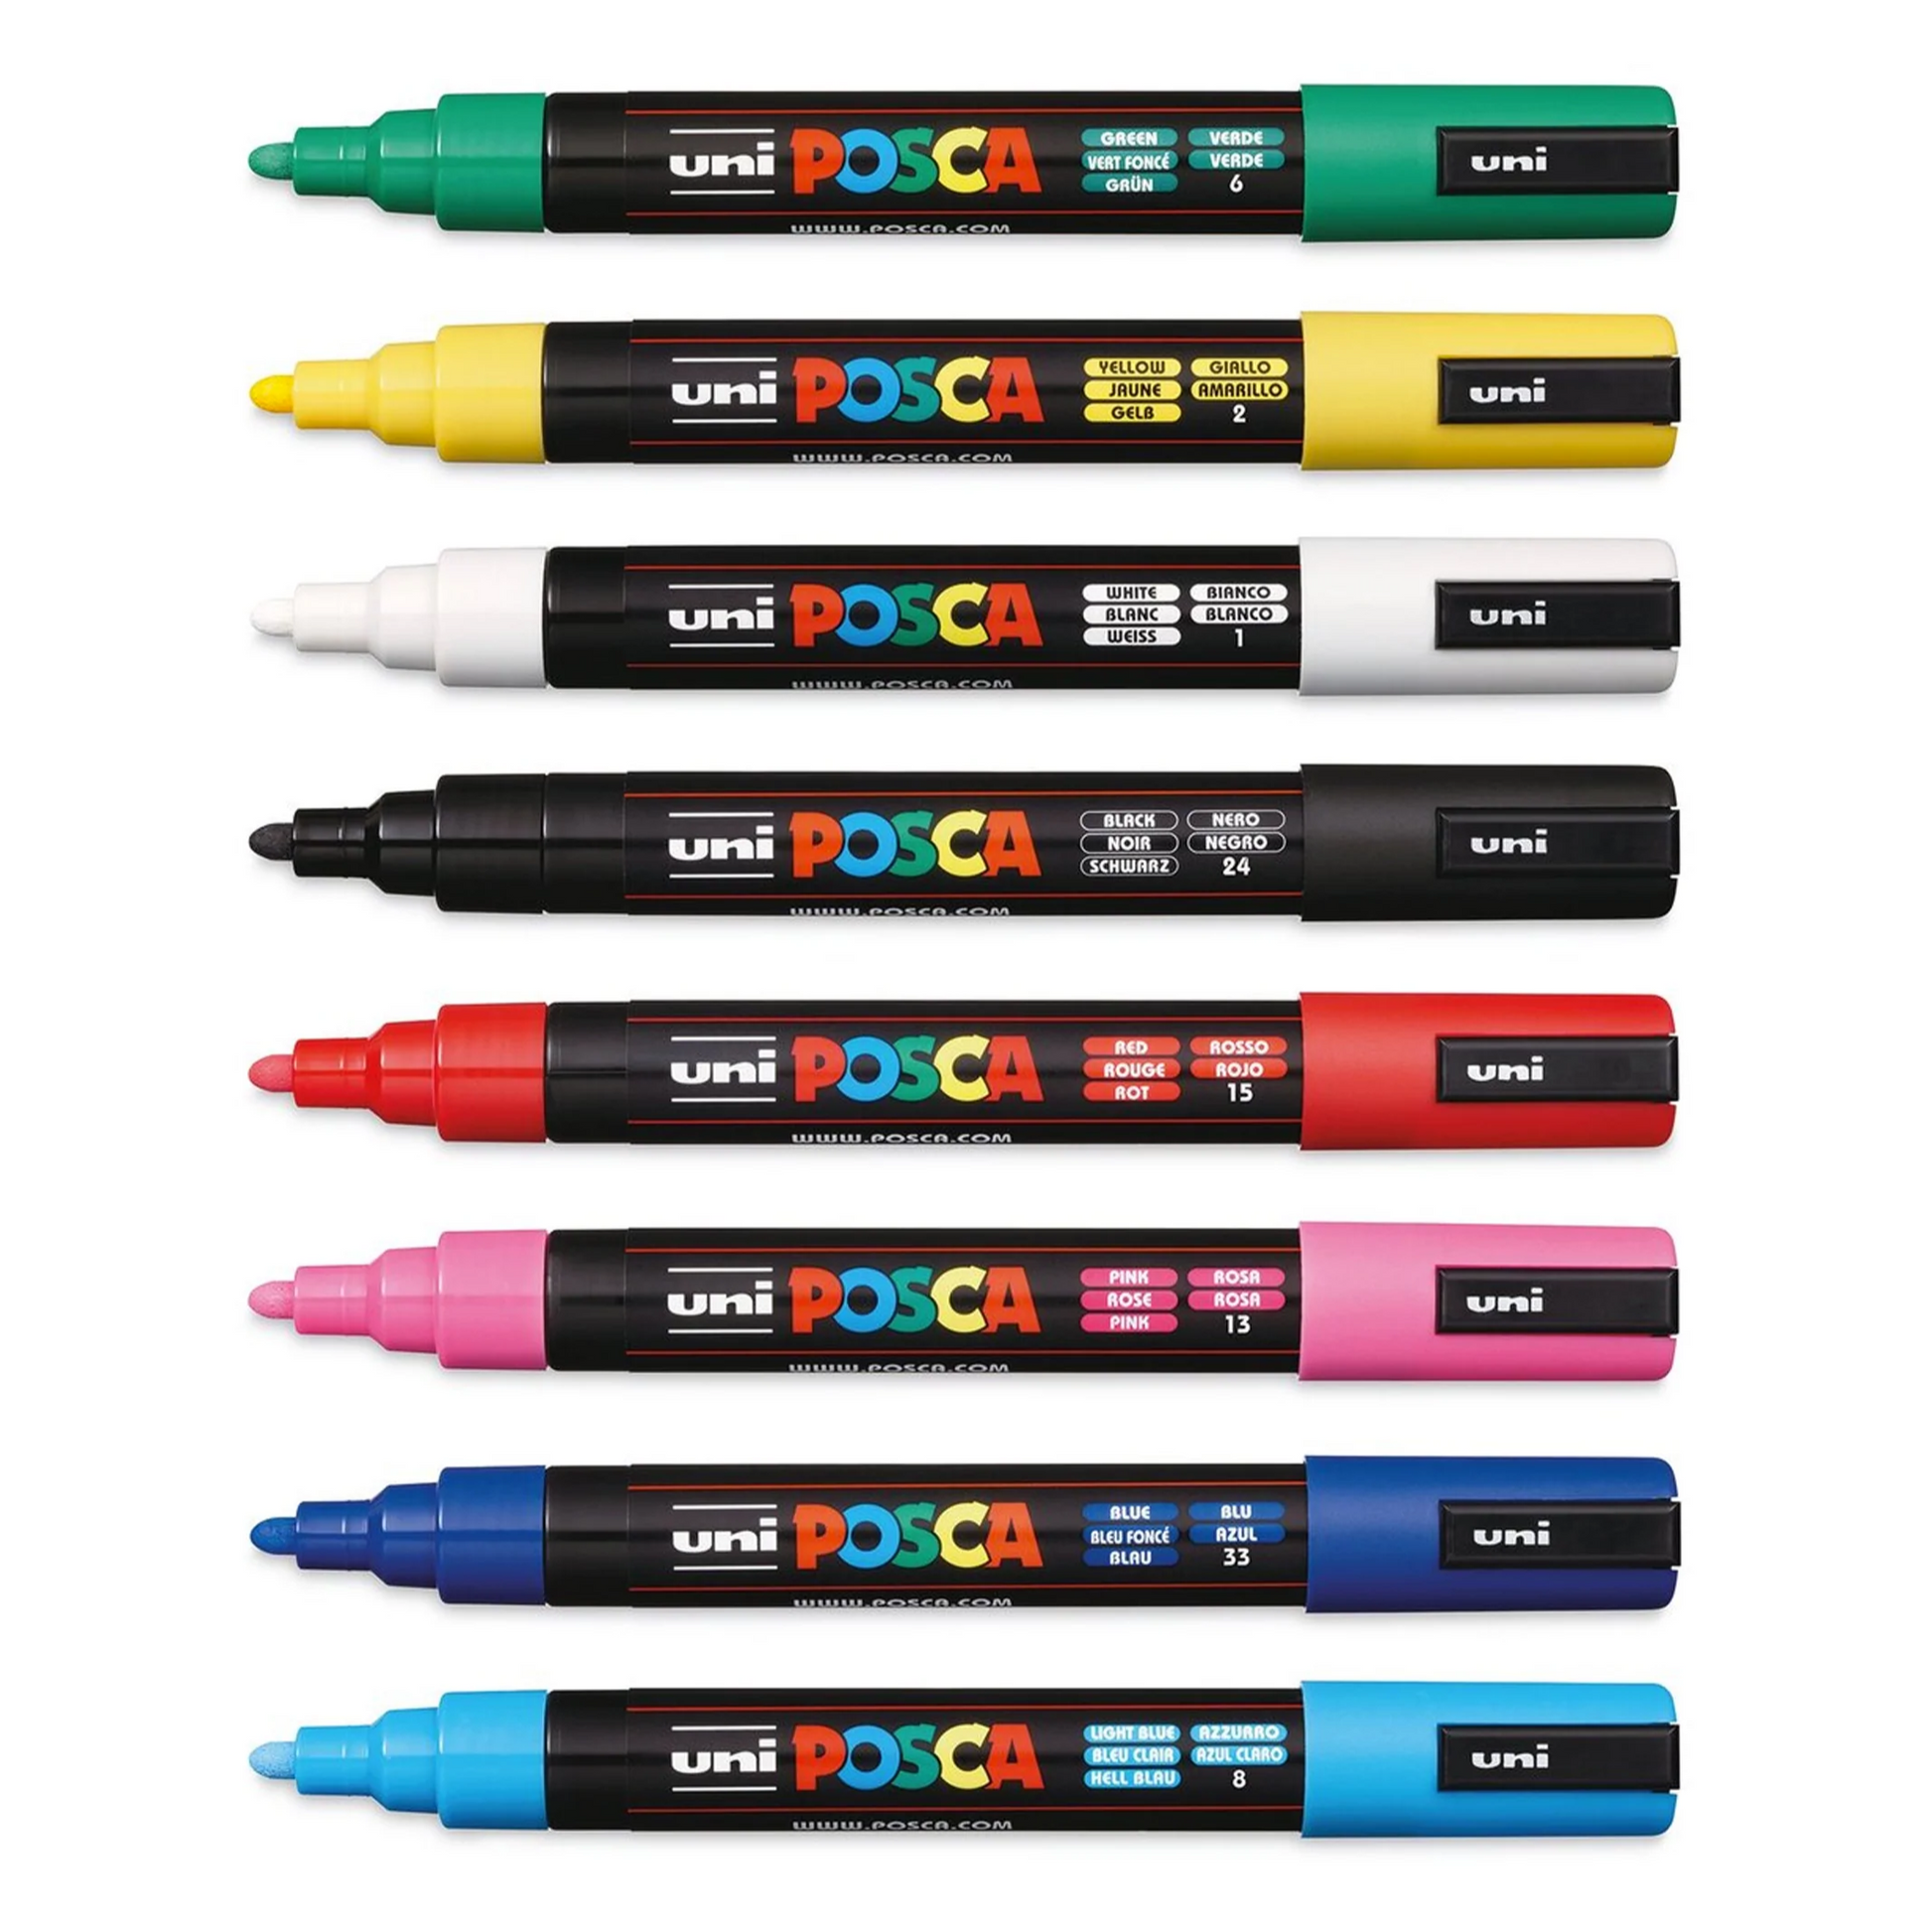 Posca Black & White - Fine to Medium Set of 8 Pens (PC-5M, PC-3M, PC-1M, PC-1MR)